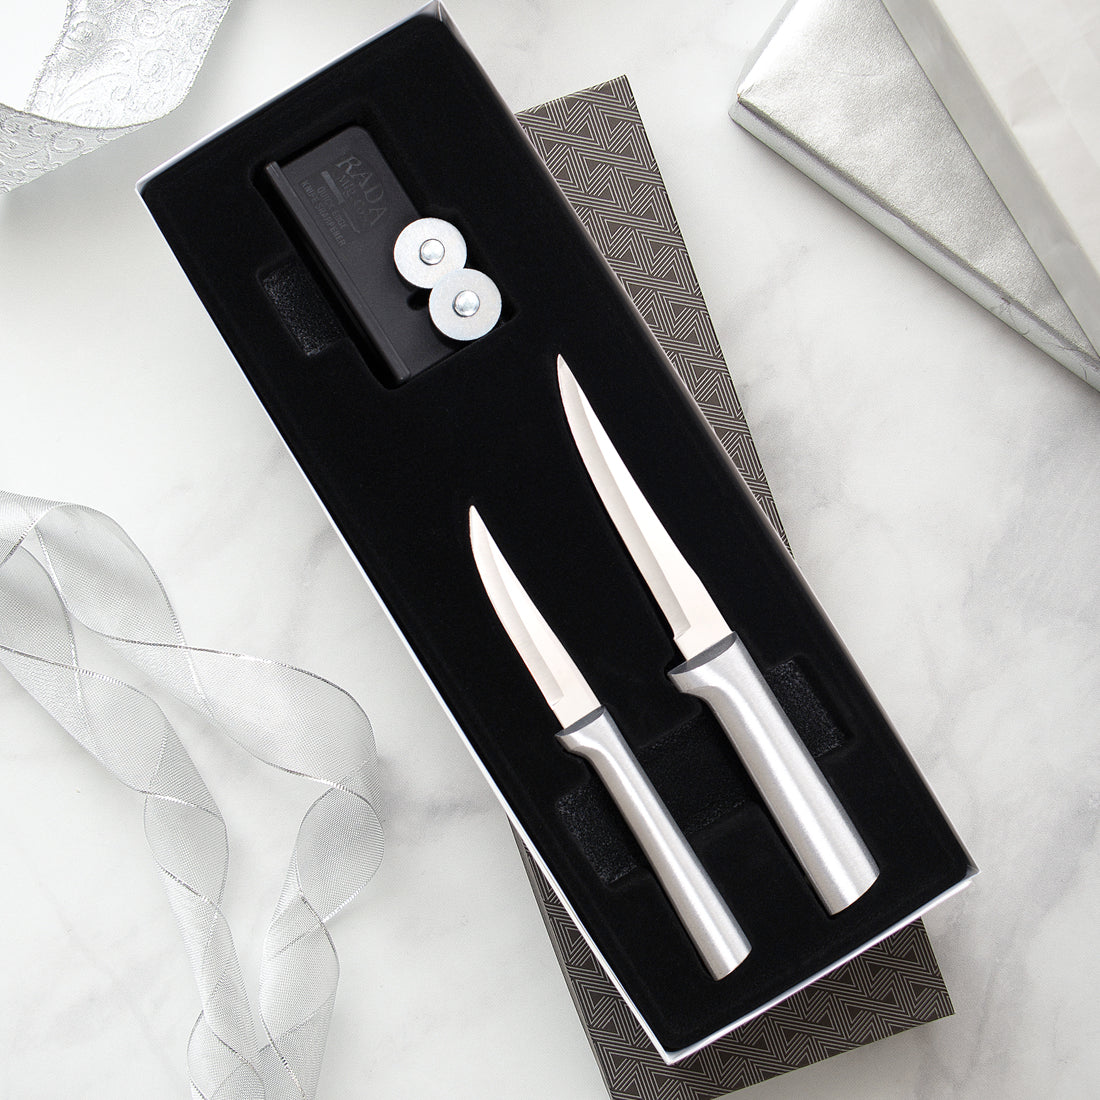 Rada Cutlery Regular Paring Knife | Black